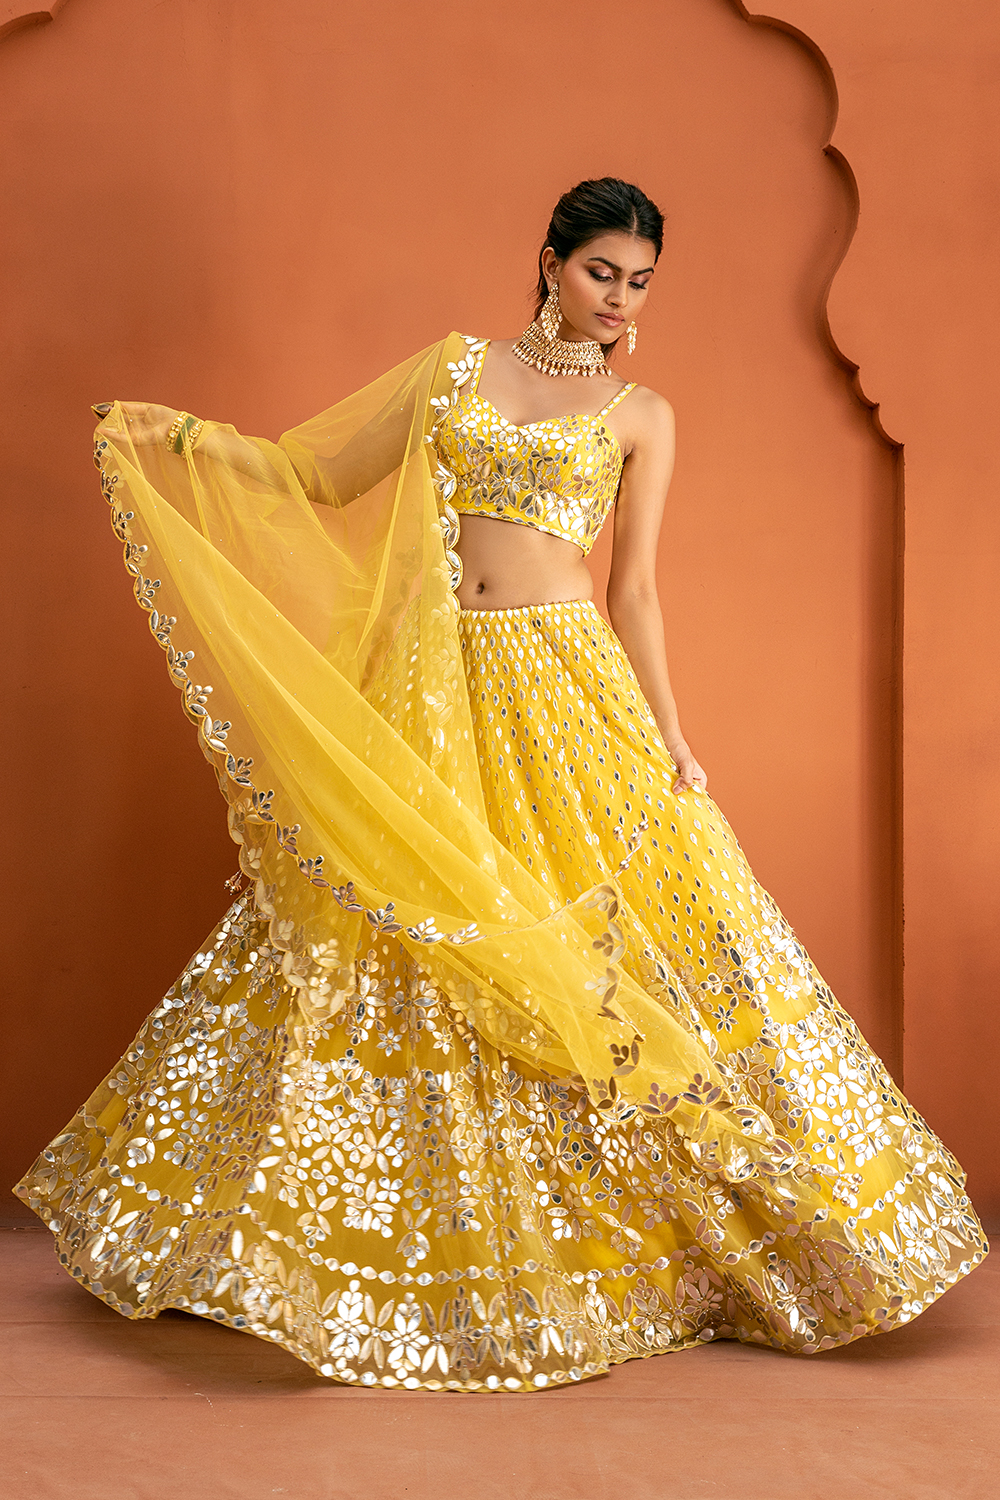 Bridal beauty lessons to learn from Shloka Ambani | Vogue India